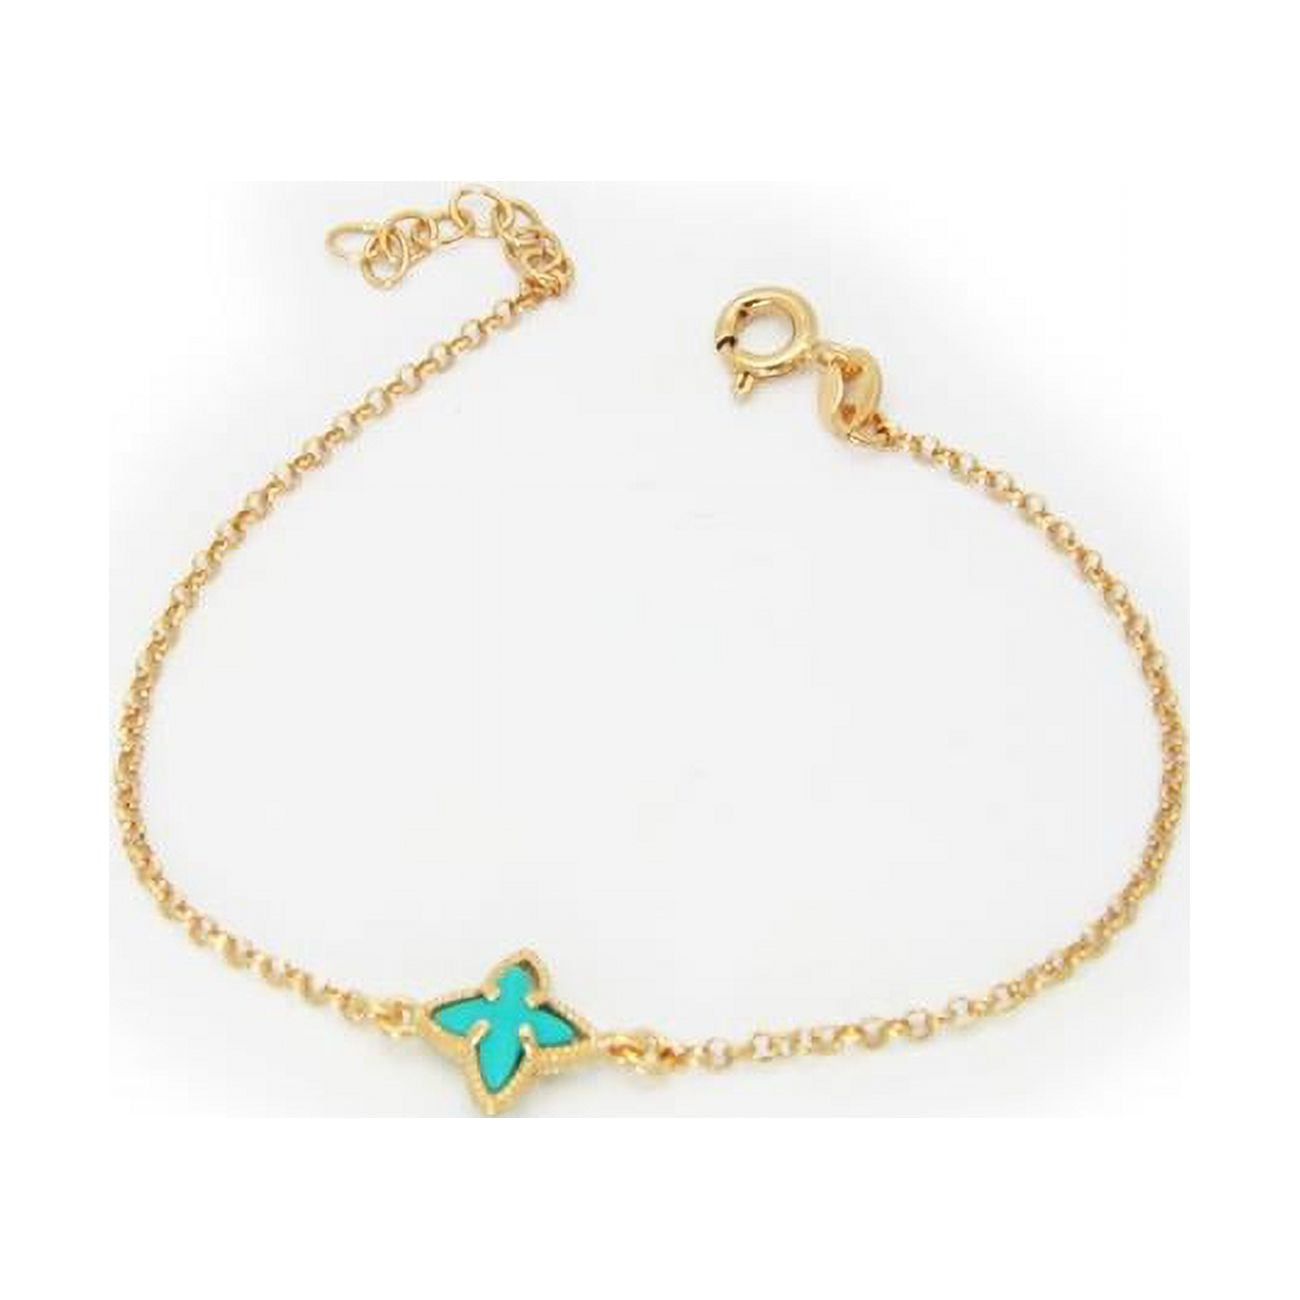 402422t 6.5 In. Ocean Turquoise Flower Crystal Bracelet In 925 Sterling Silver